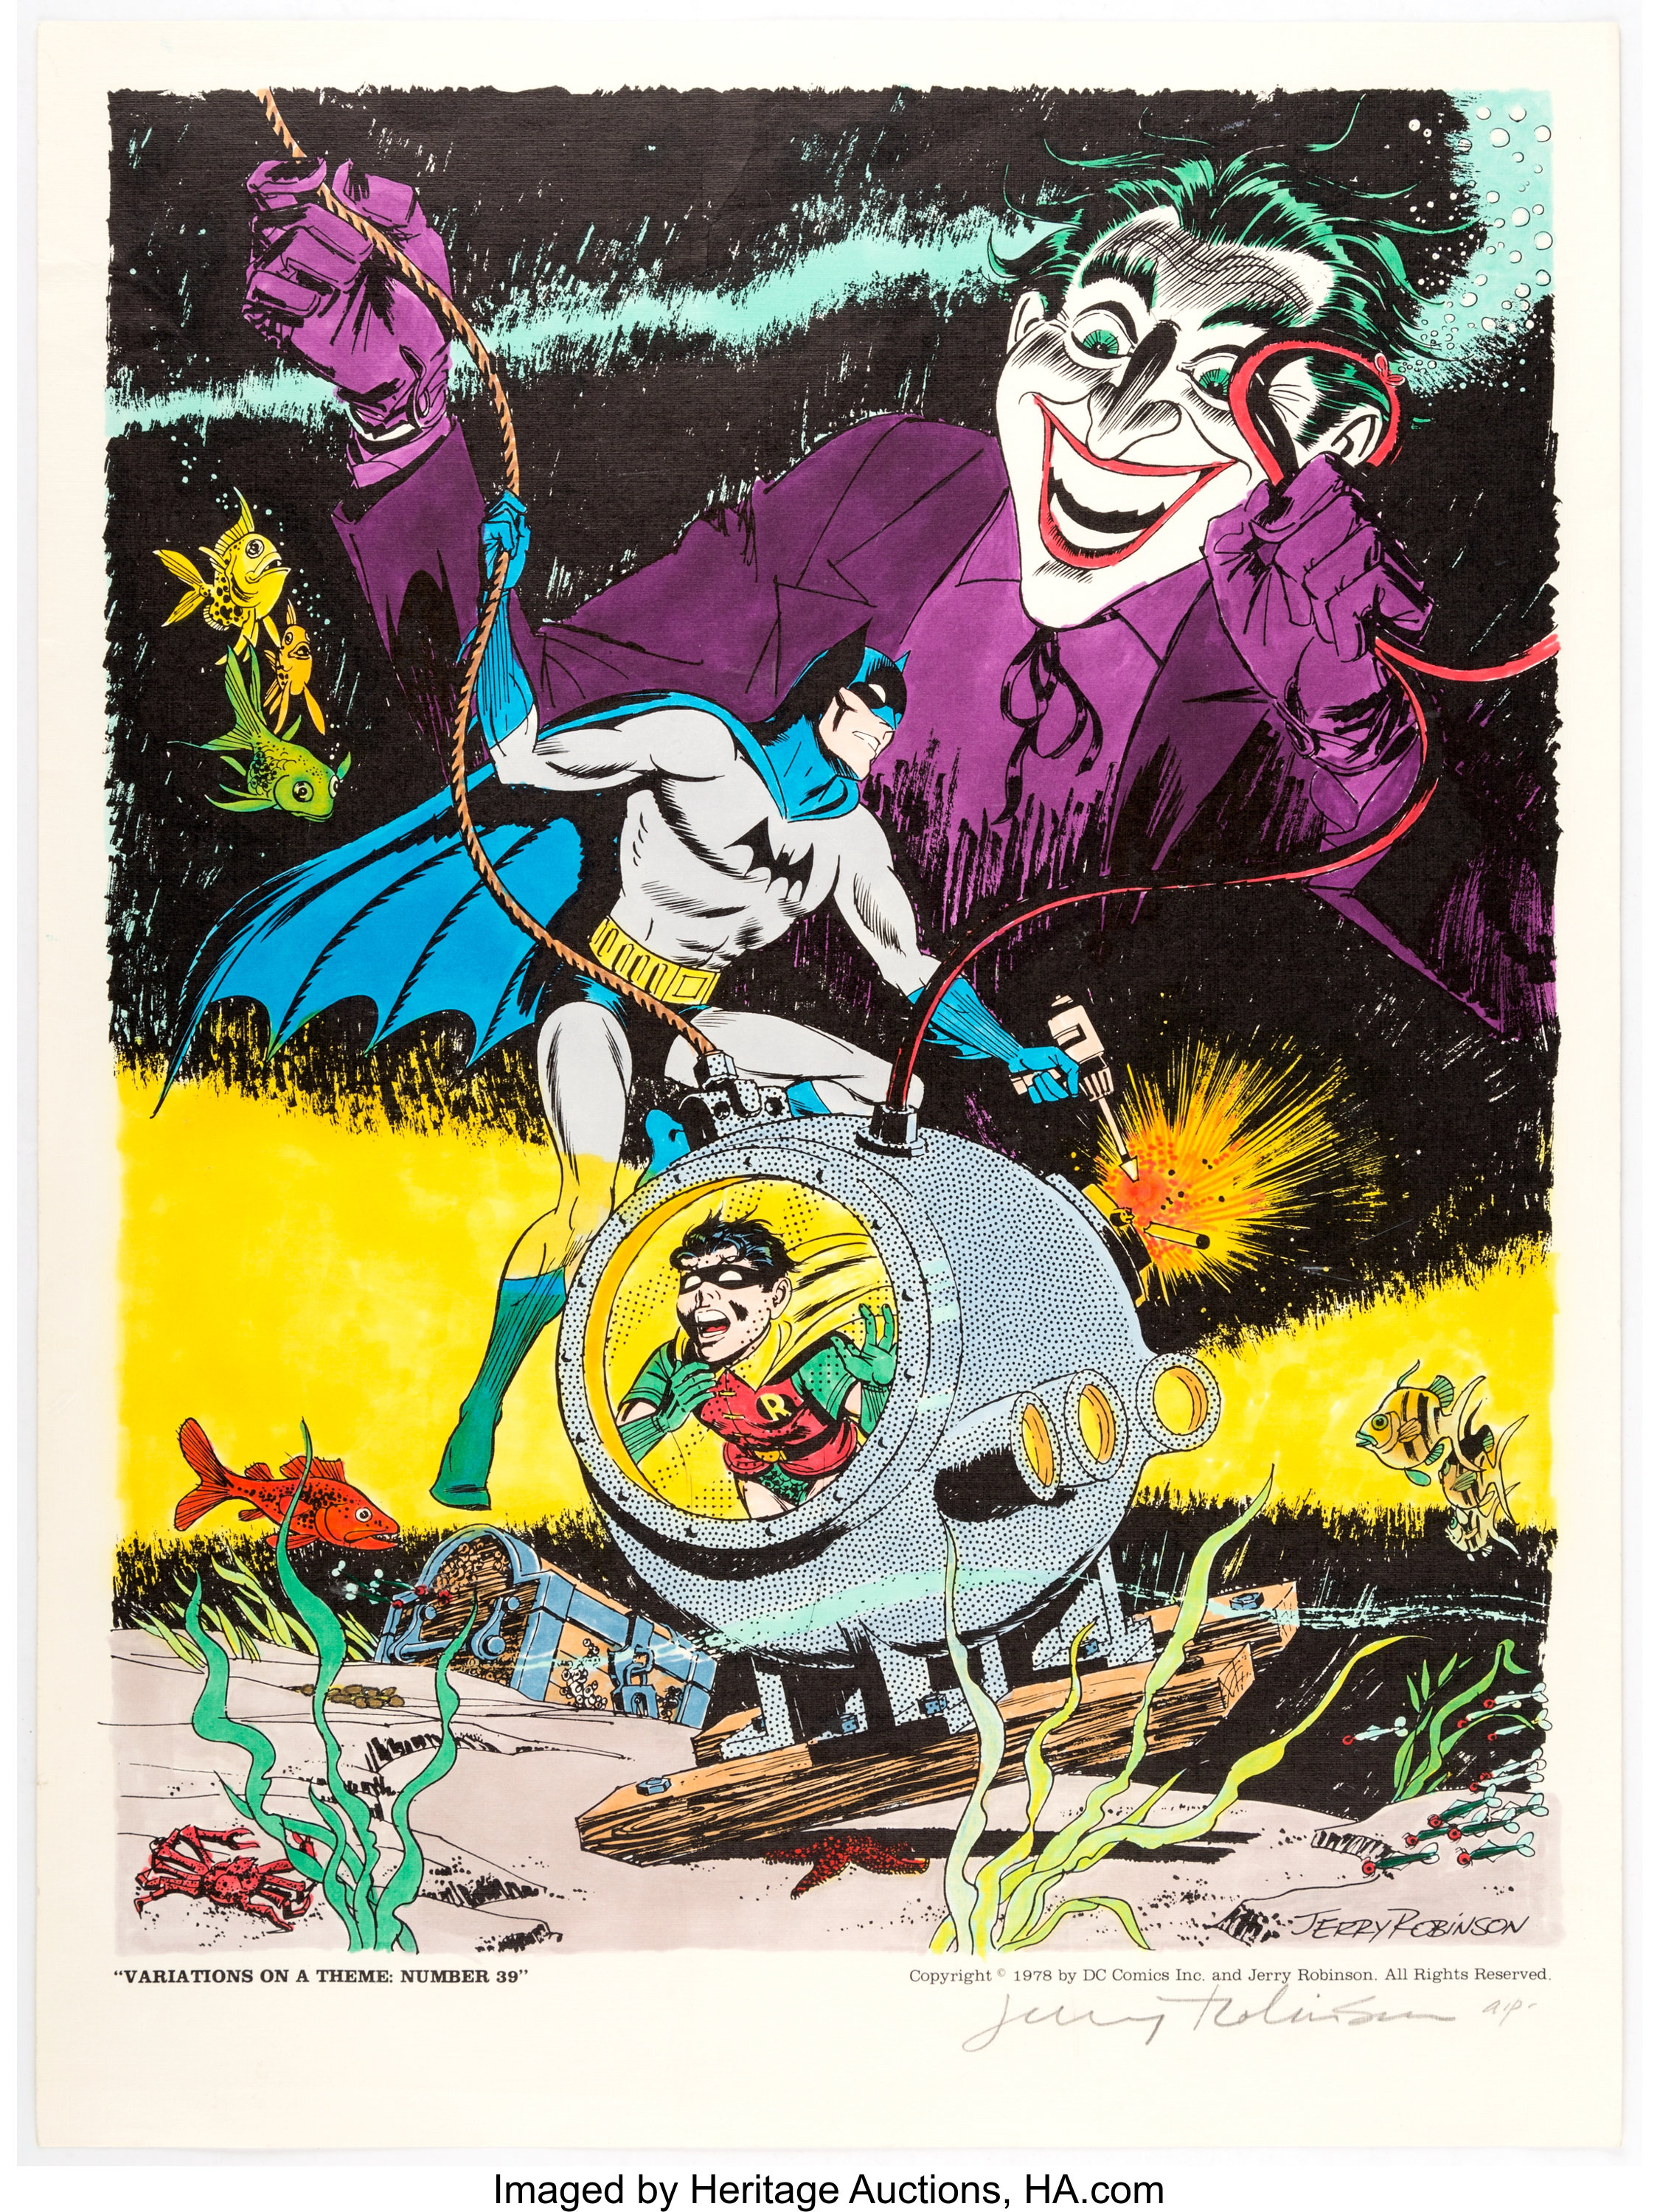 Jerry Robinson Variations on a Theme #39 Batman-Joker Portfolio | Lot  #17834 | Heritage Auctions